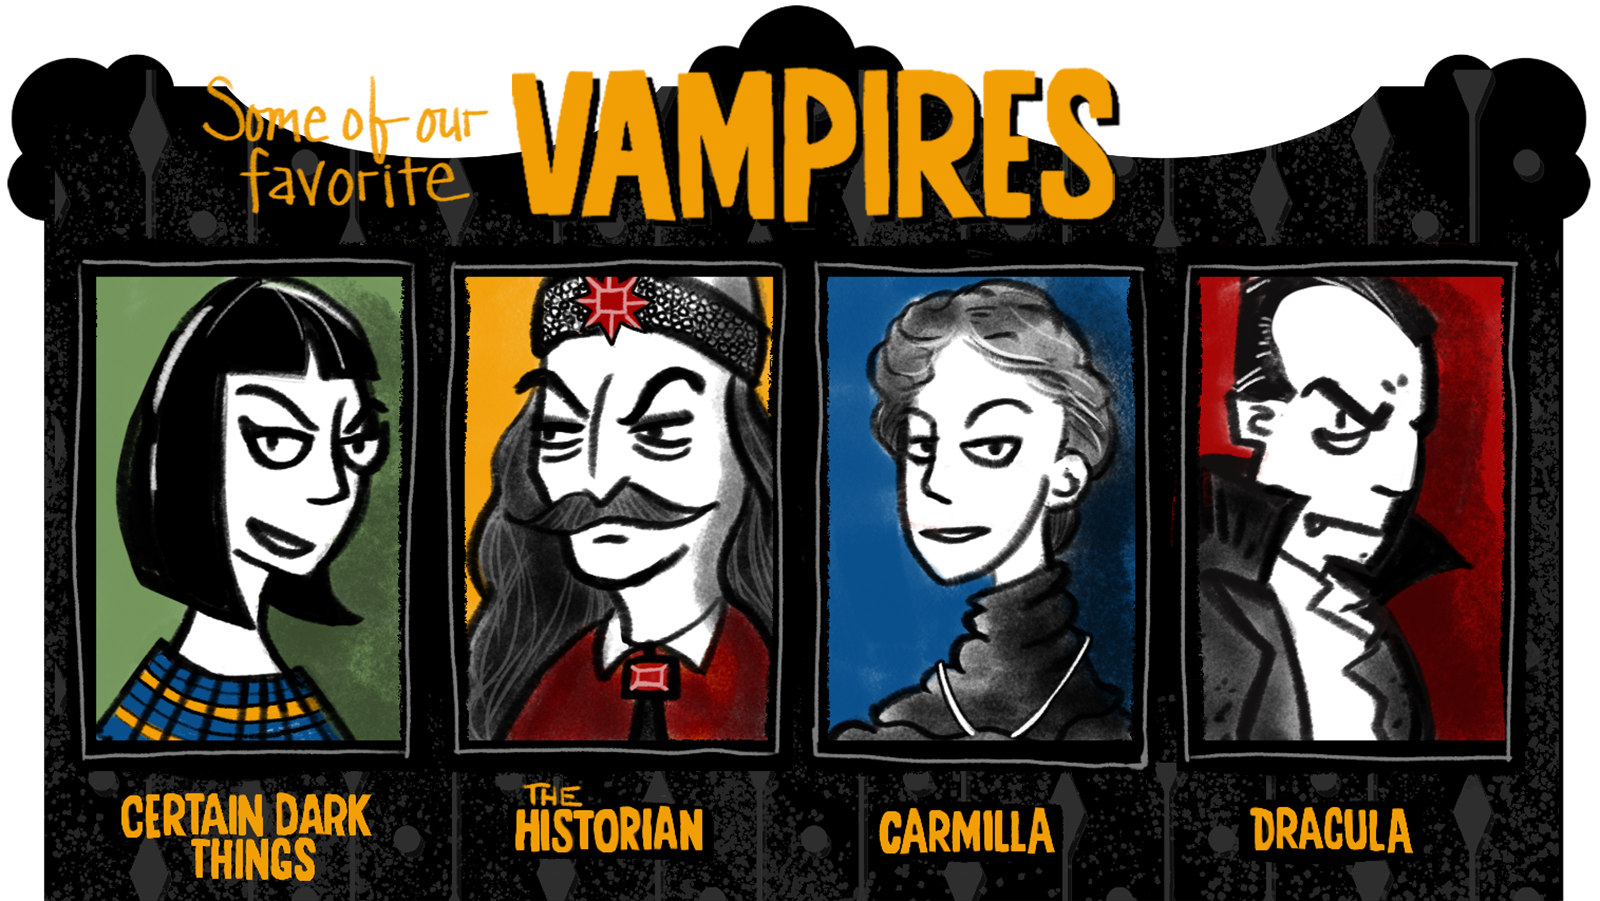 Our favorite vampires.